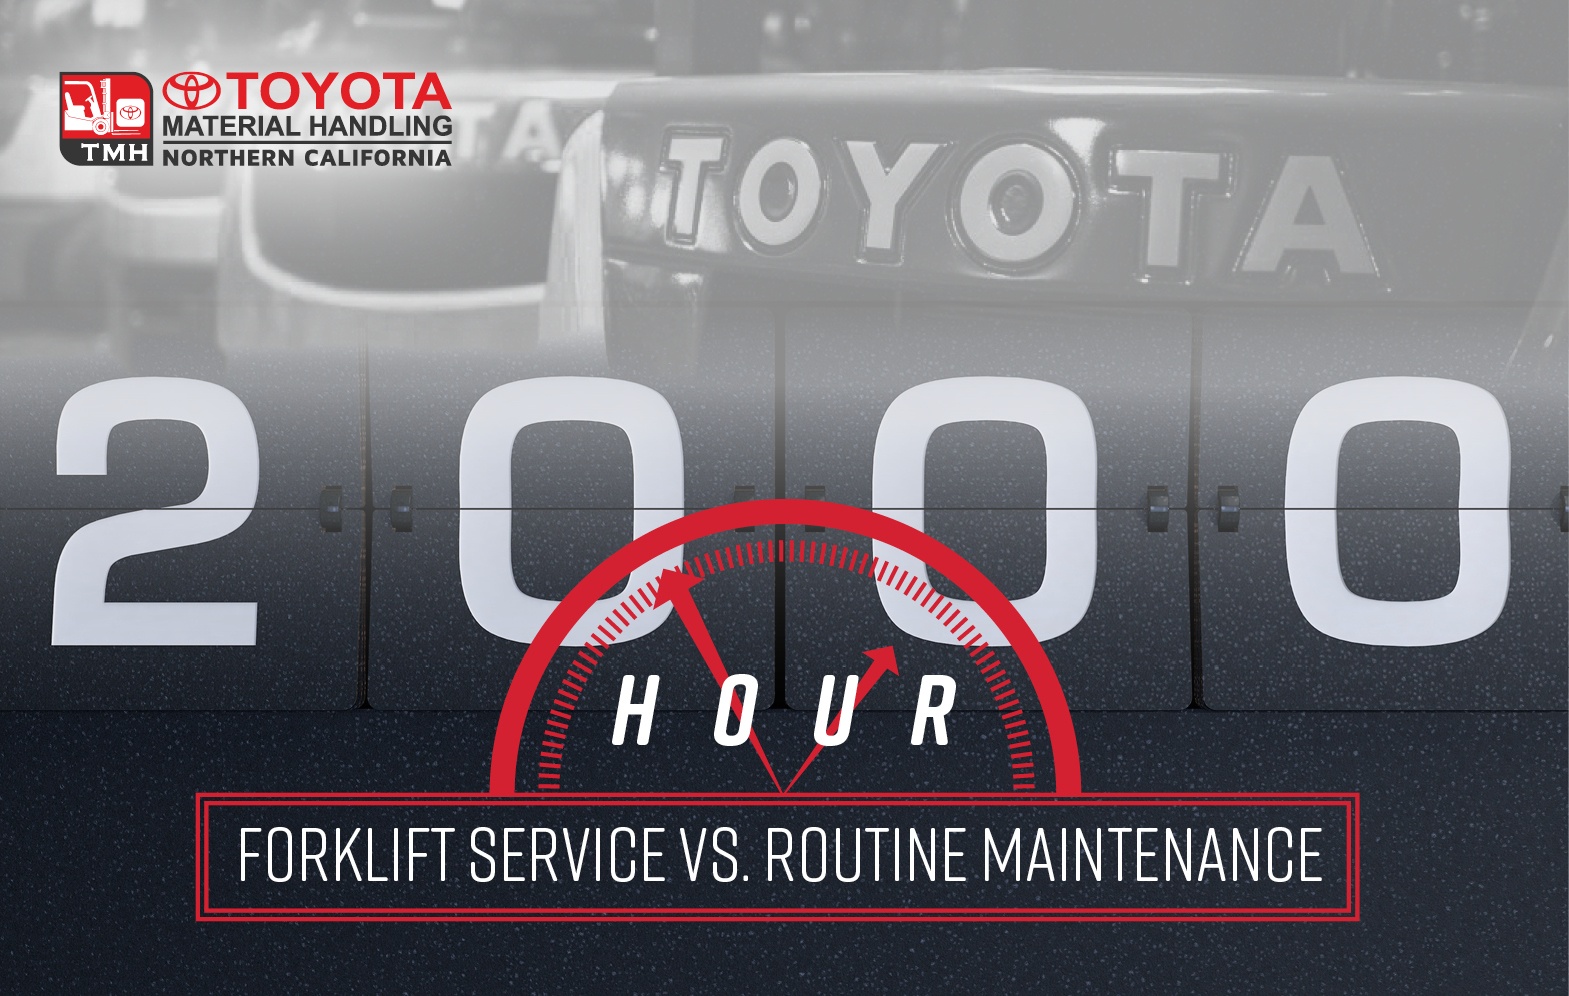 2000-hour Forklift Service Vs. Routine Maintenance